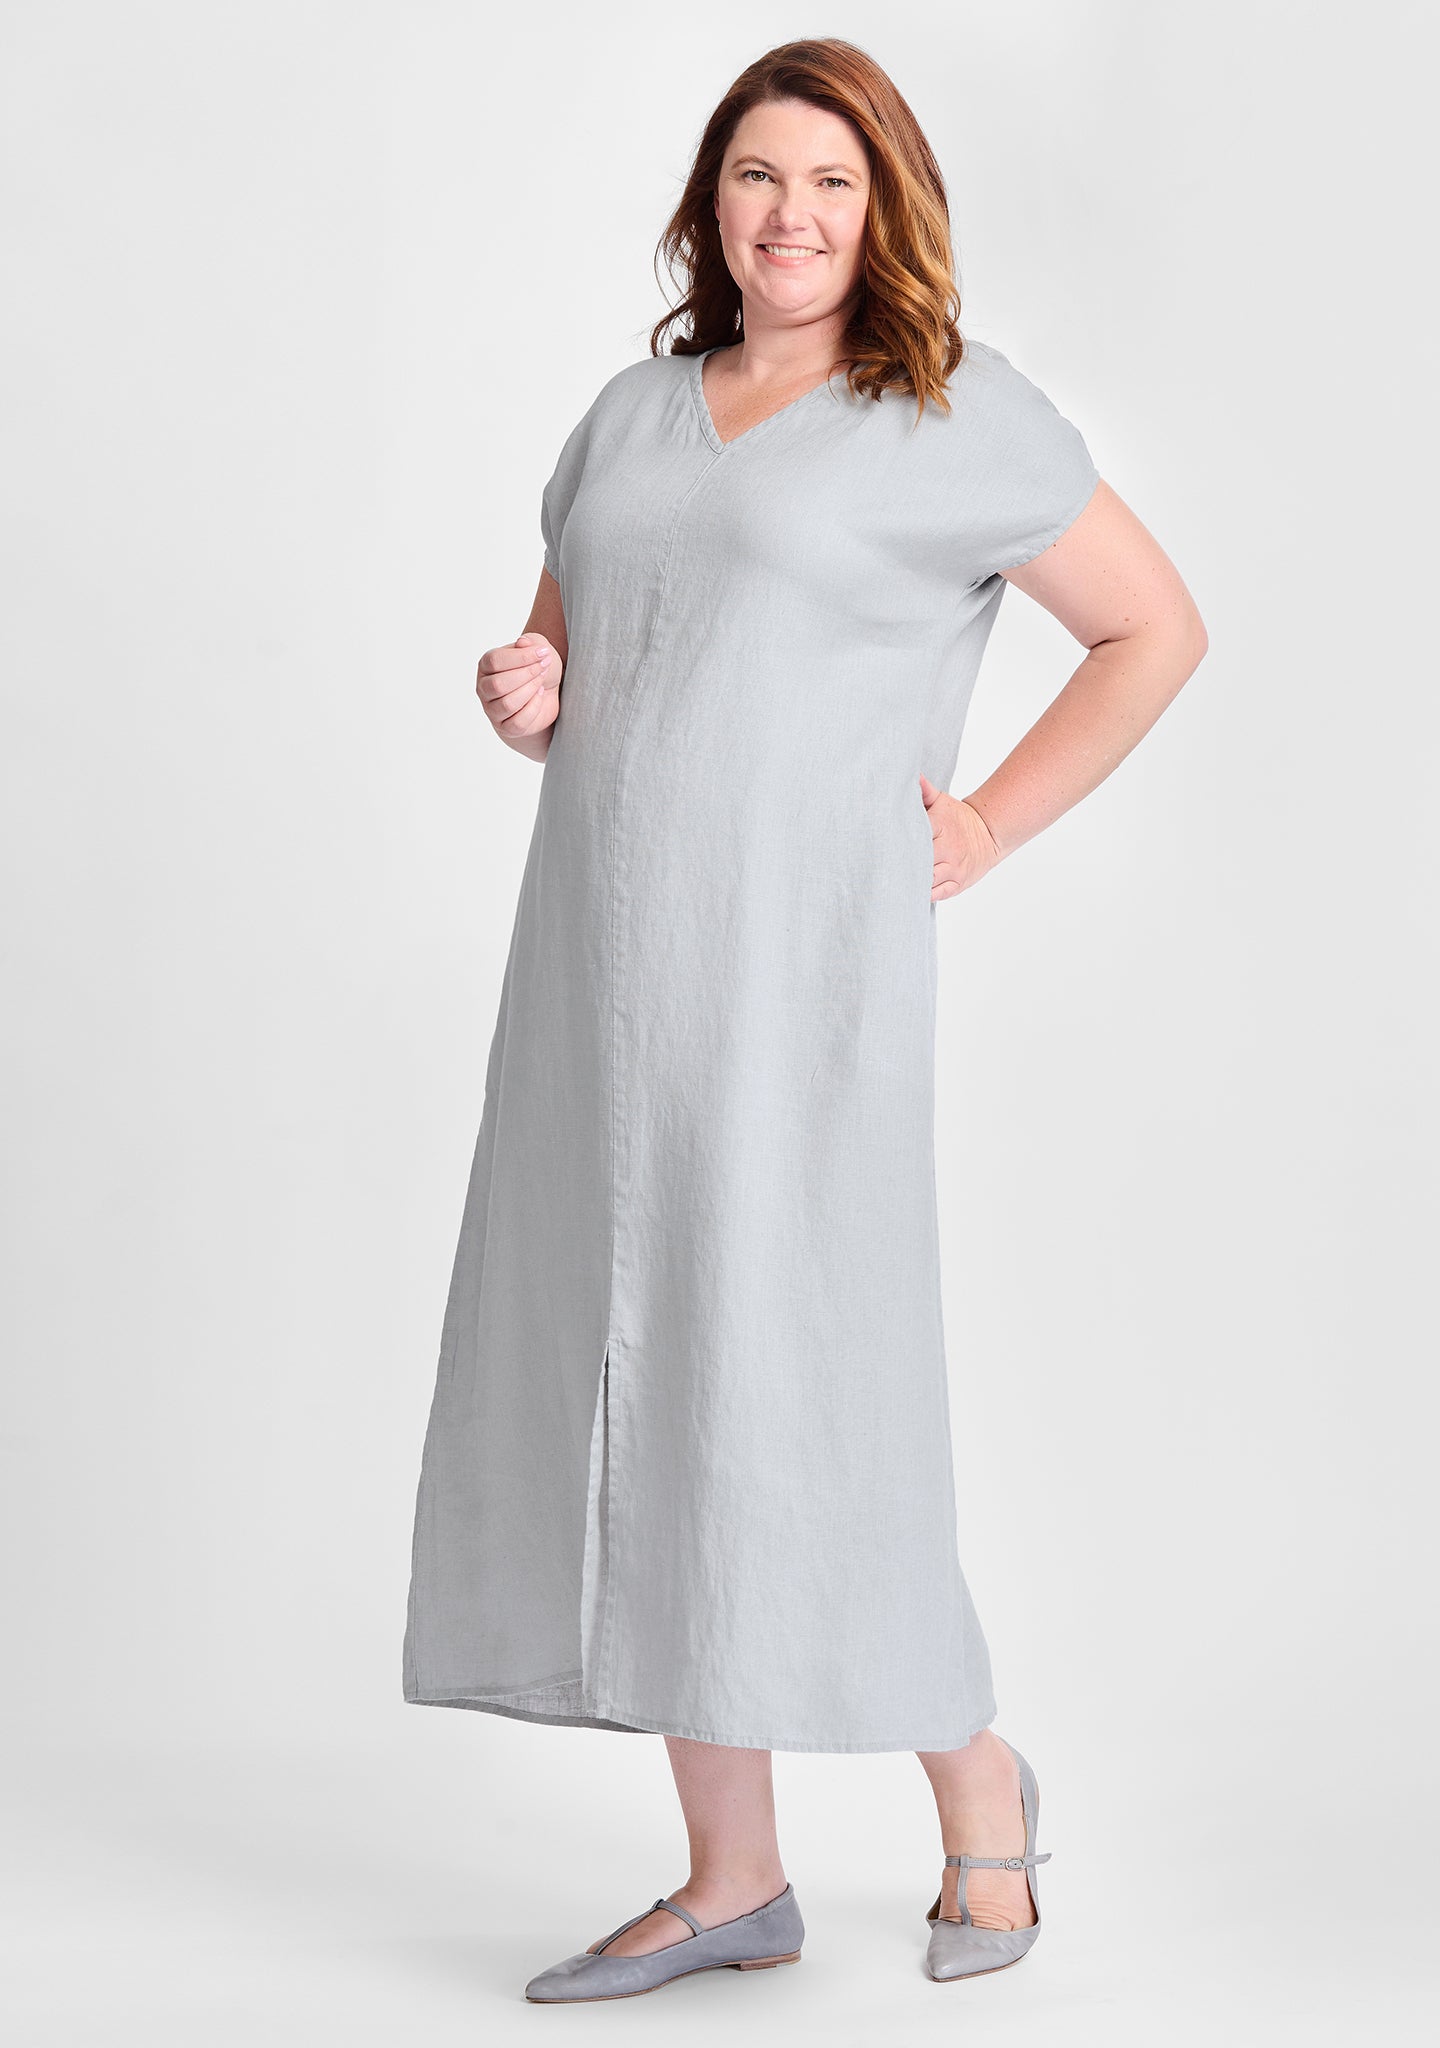 FLAX linen dress in grey